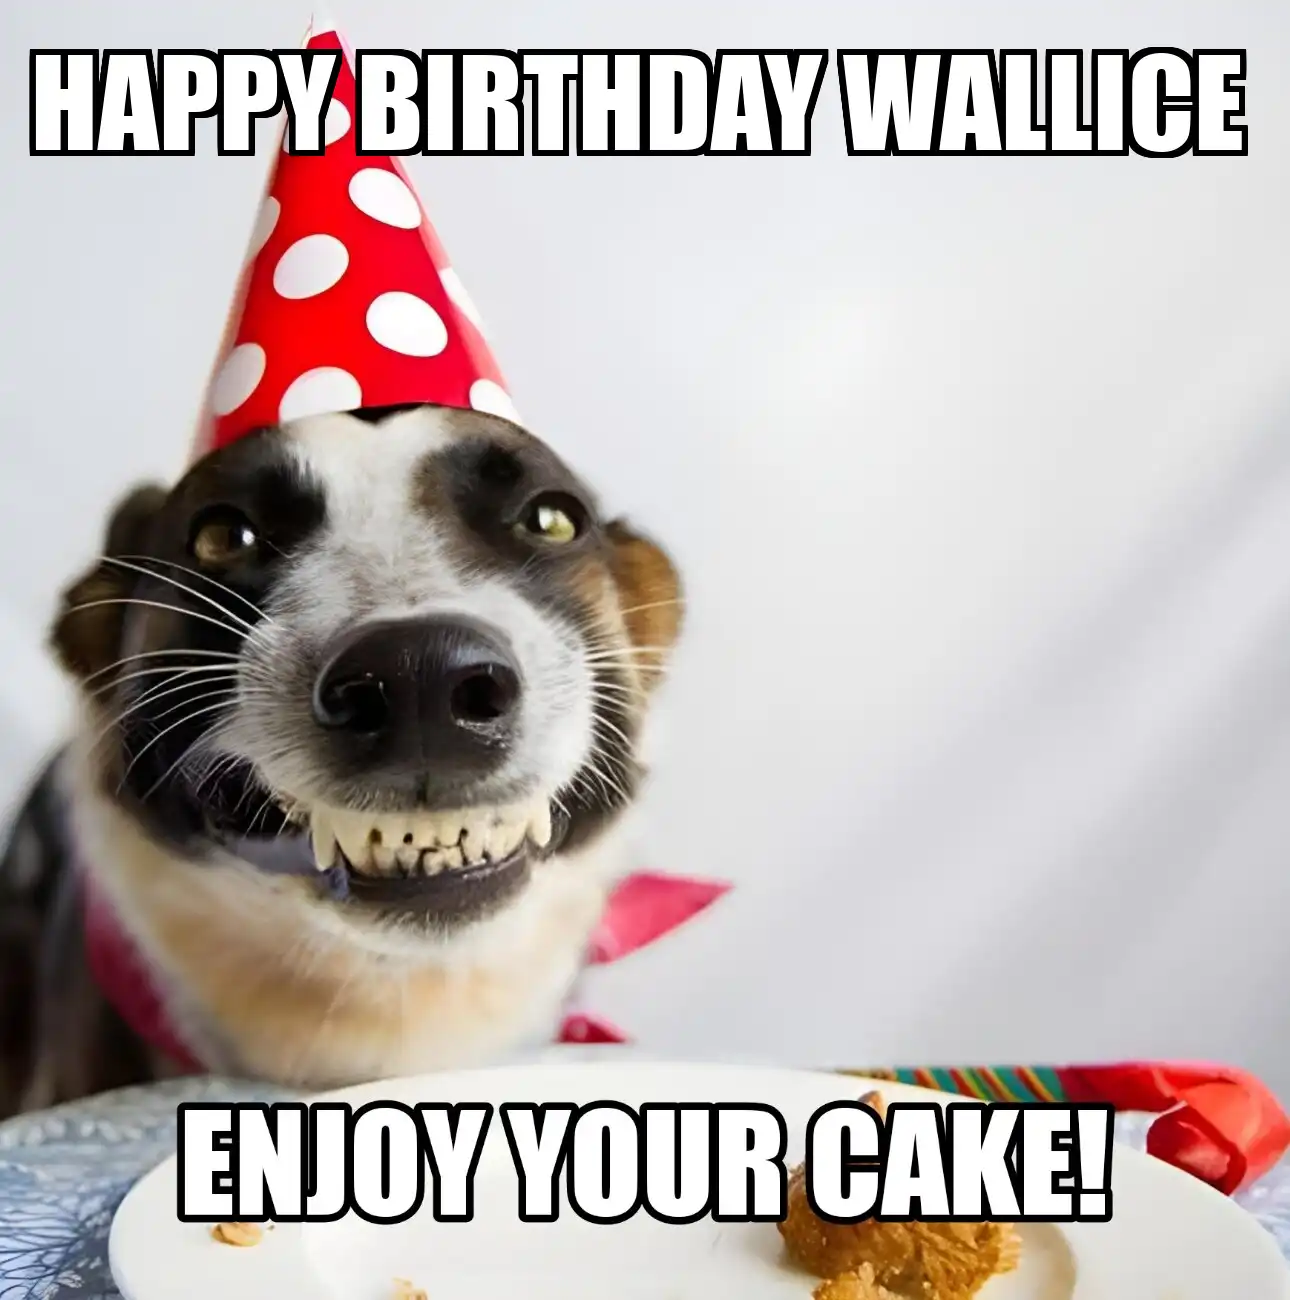 Happy Birthday Wallice Enjoy Your Cake Dog Meme